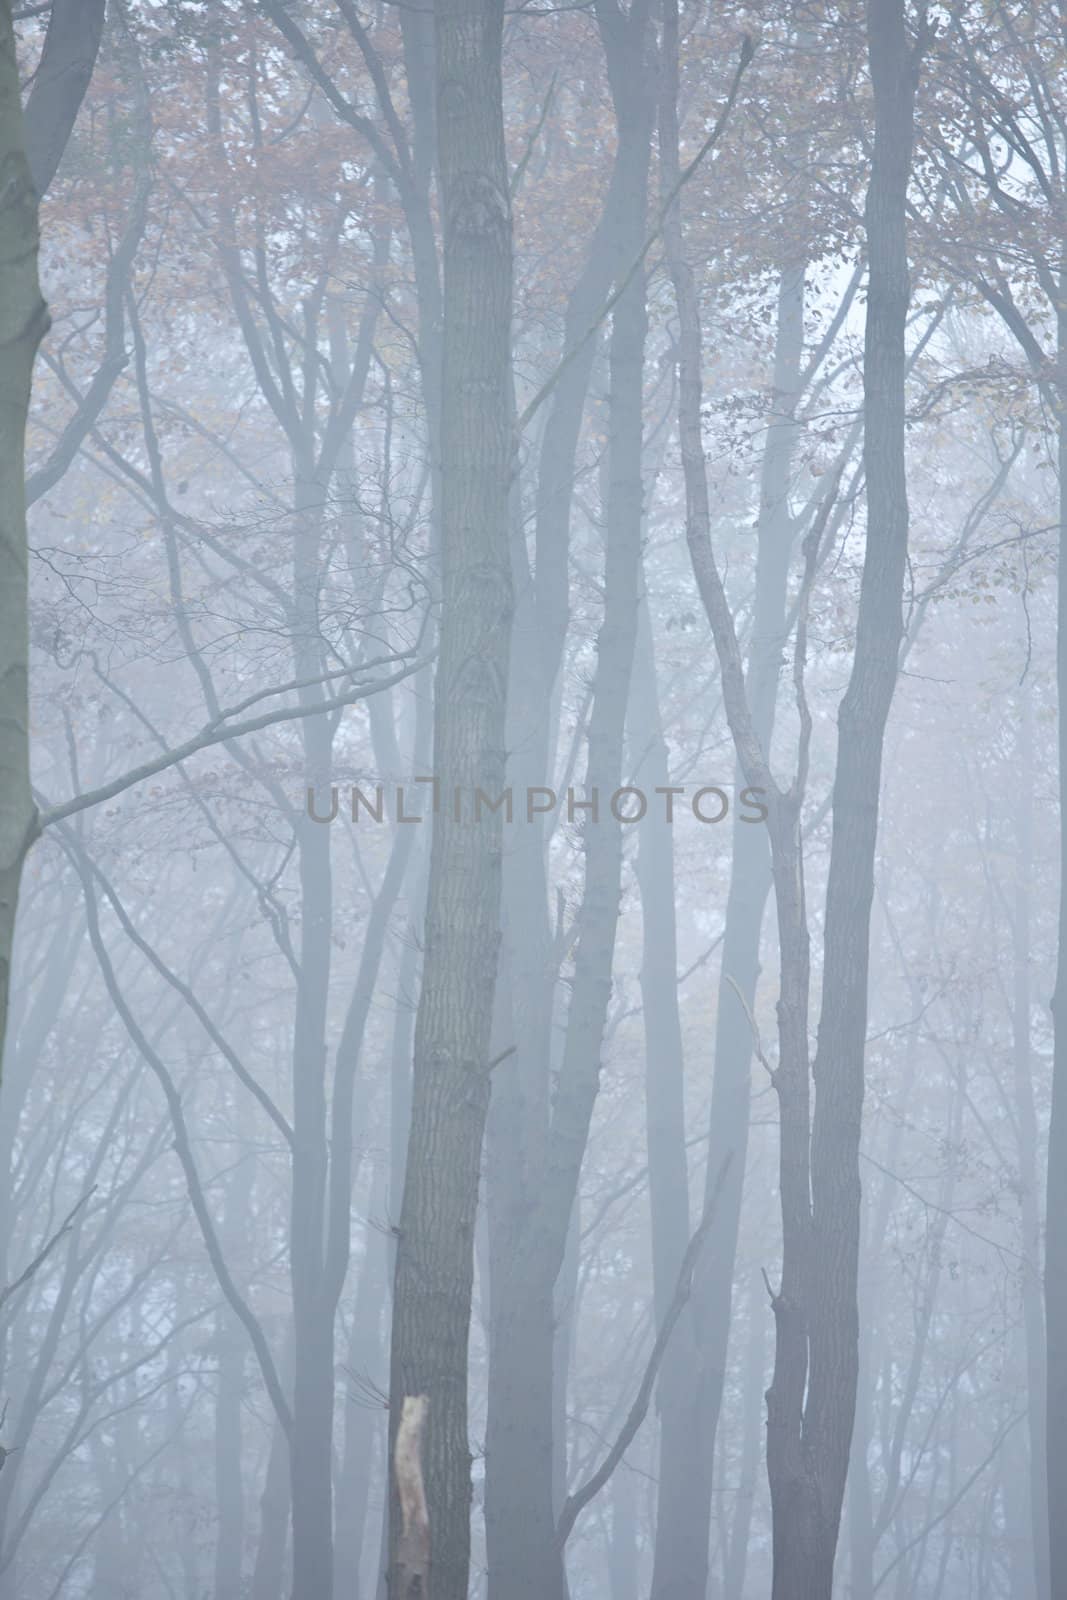 Wald im nebel by aidasonne